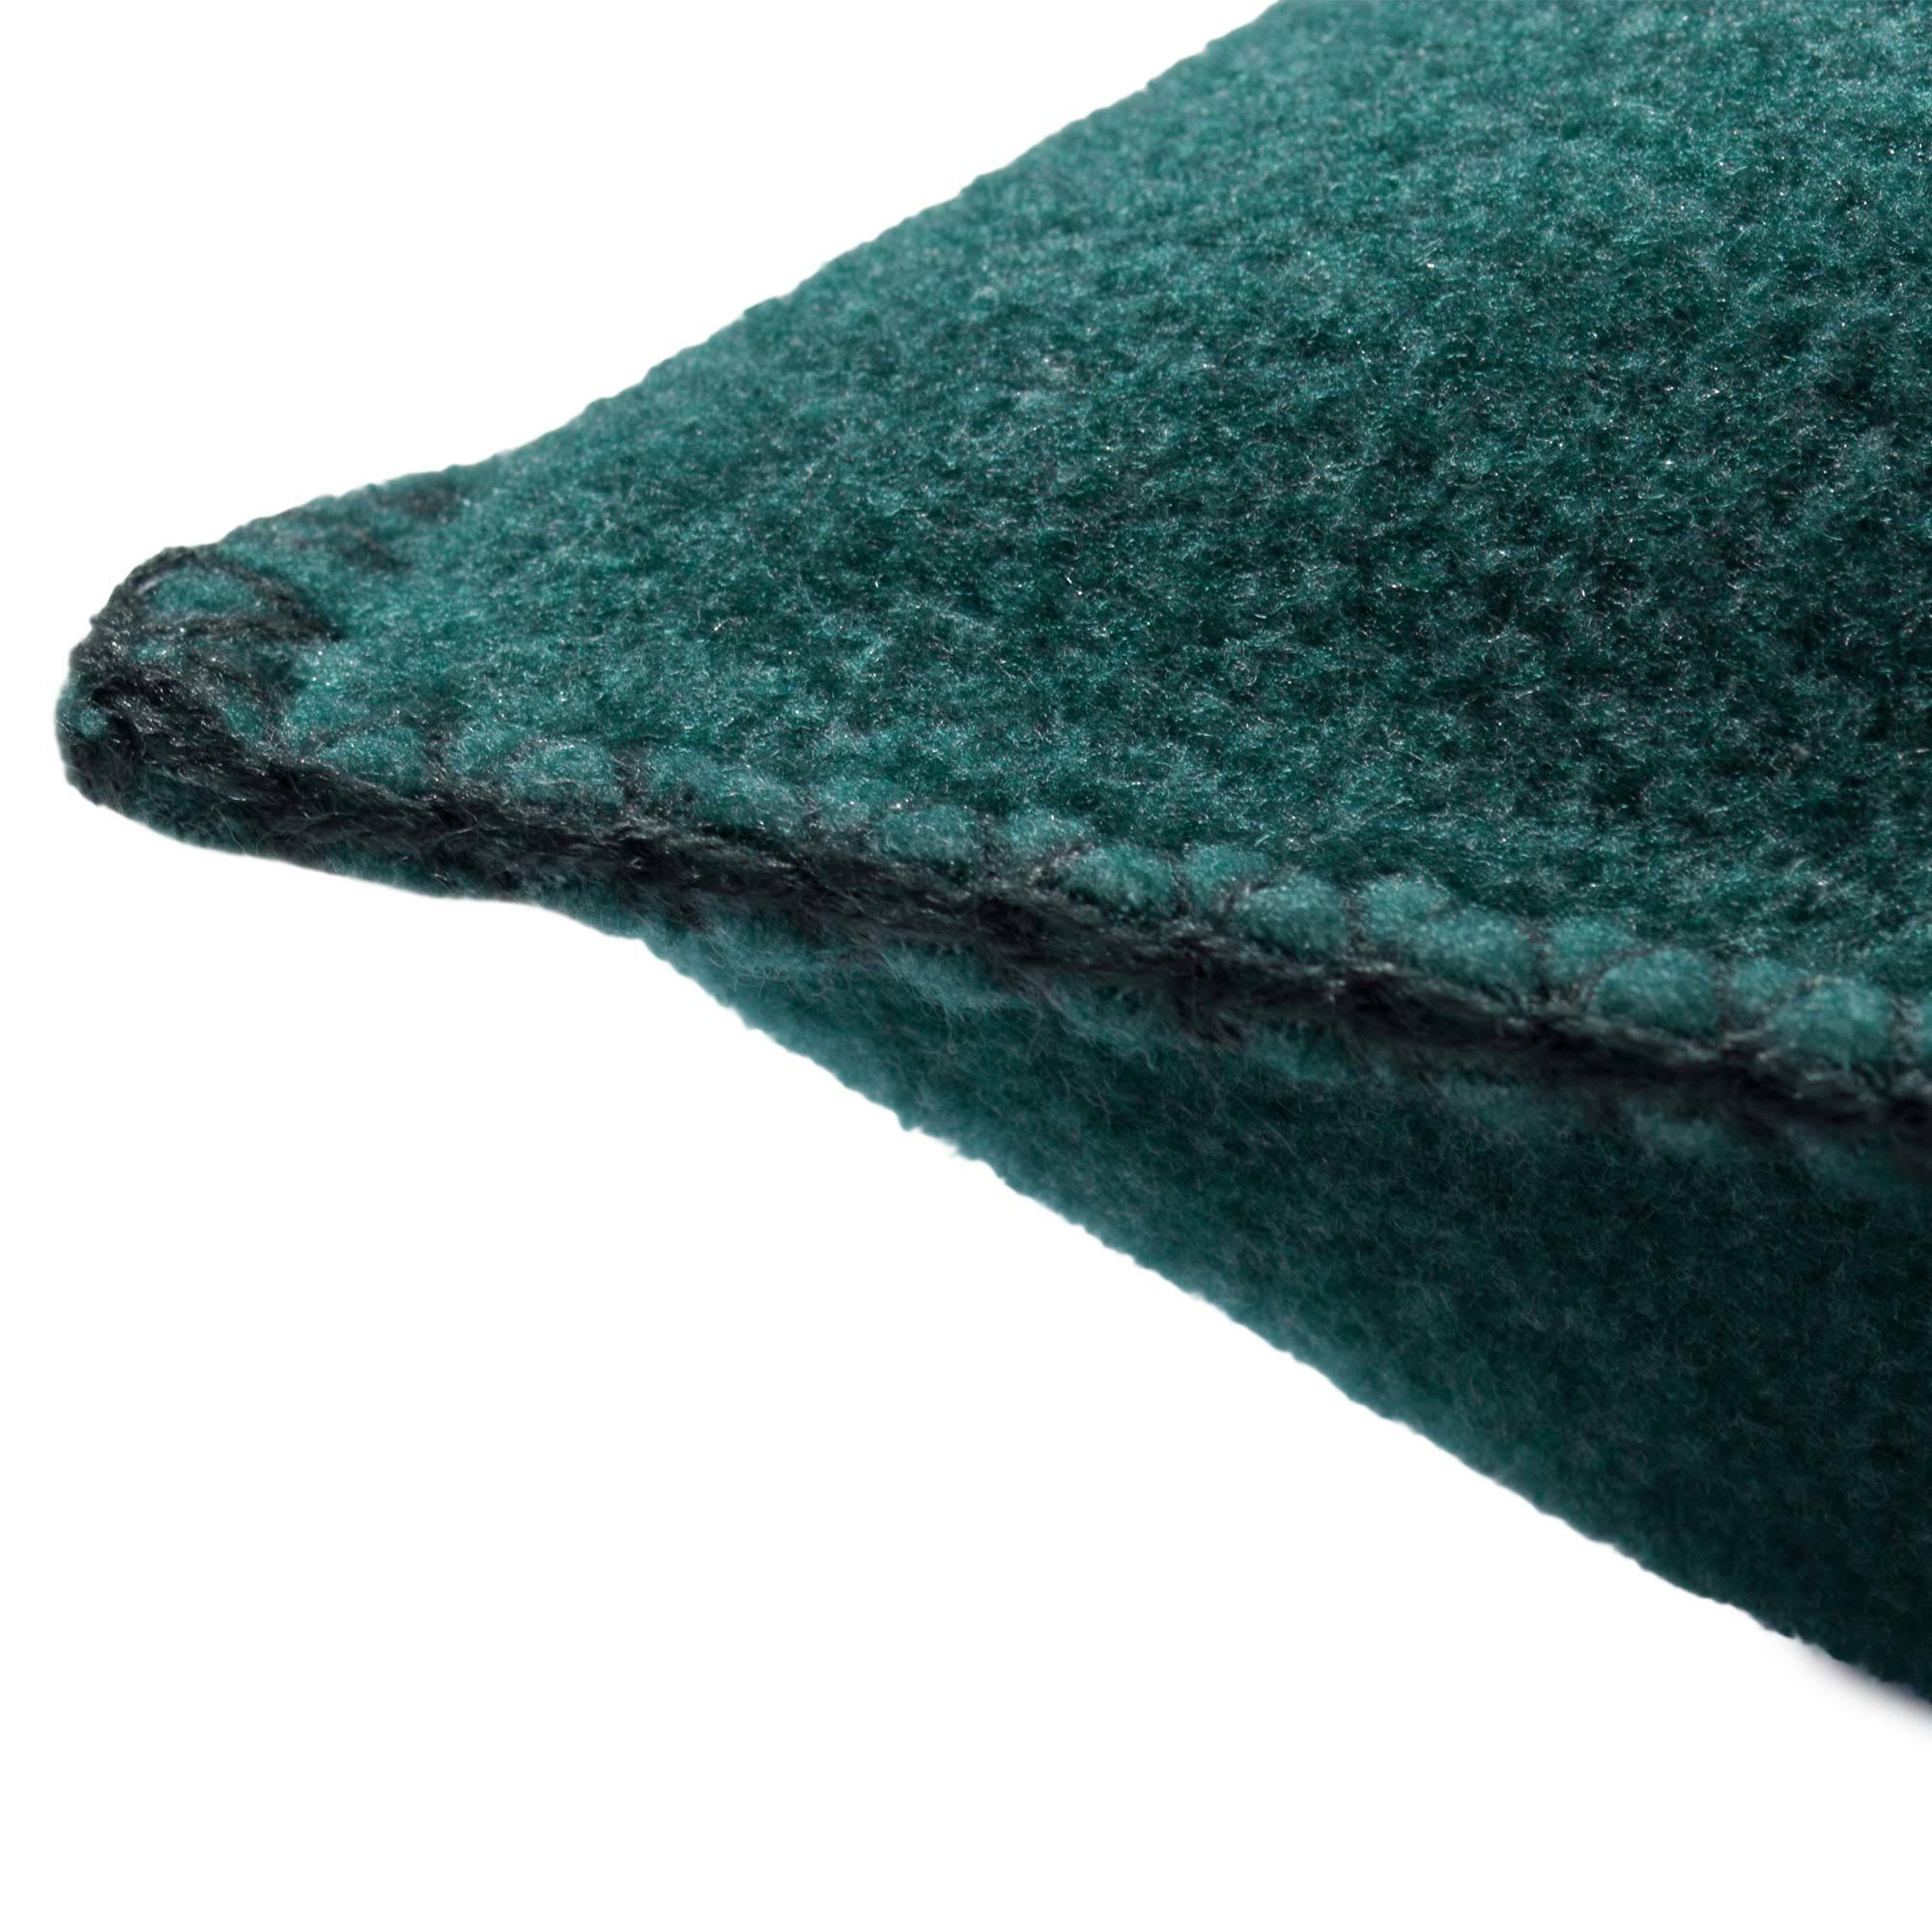 KISSENHÜLLE Soft-Fleece 50/50 cm  - Petrol, KONVENTIONELL, Textil (50/50cm) - Zoeppritz